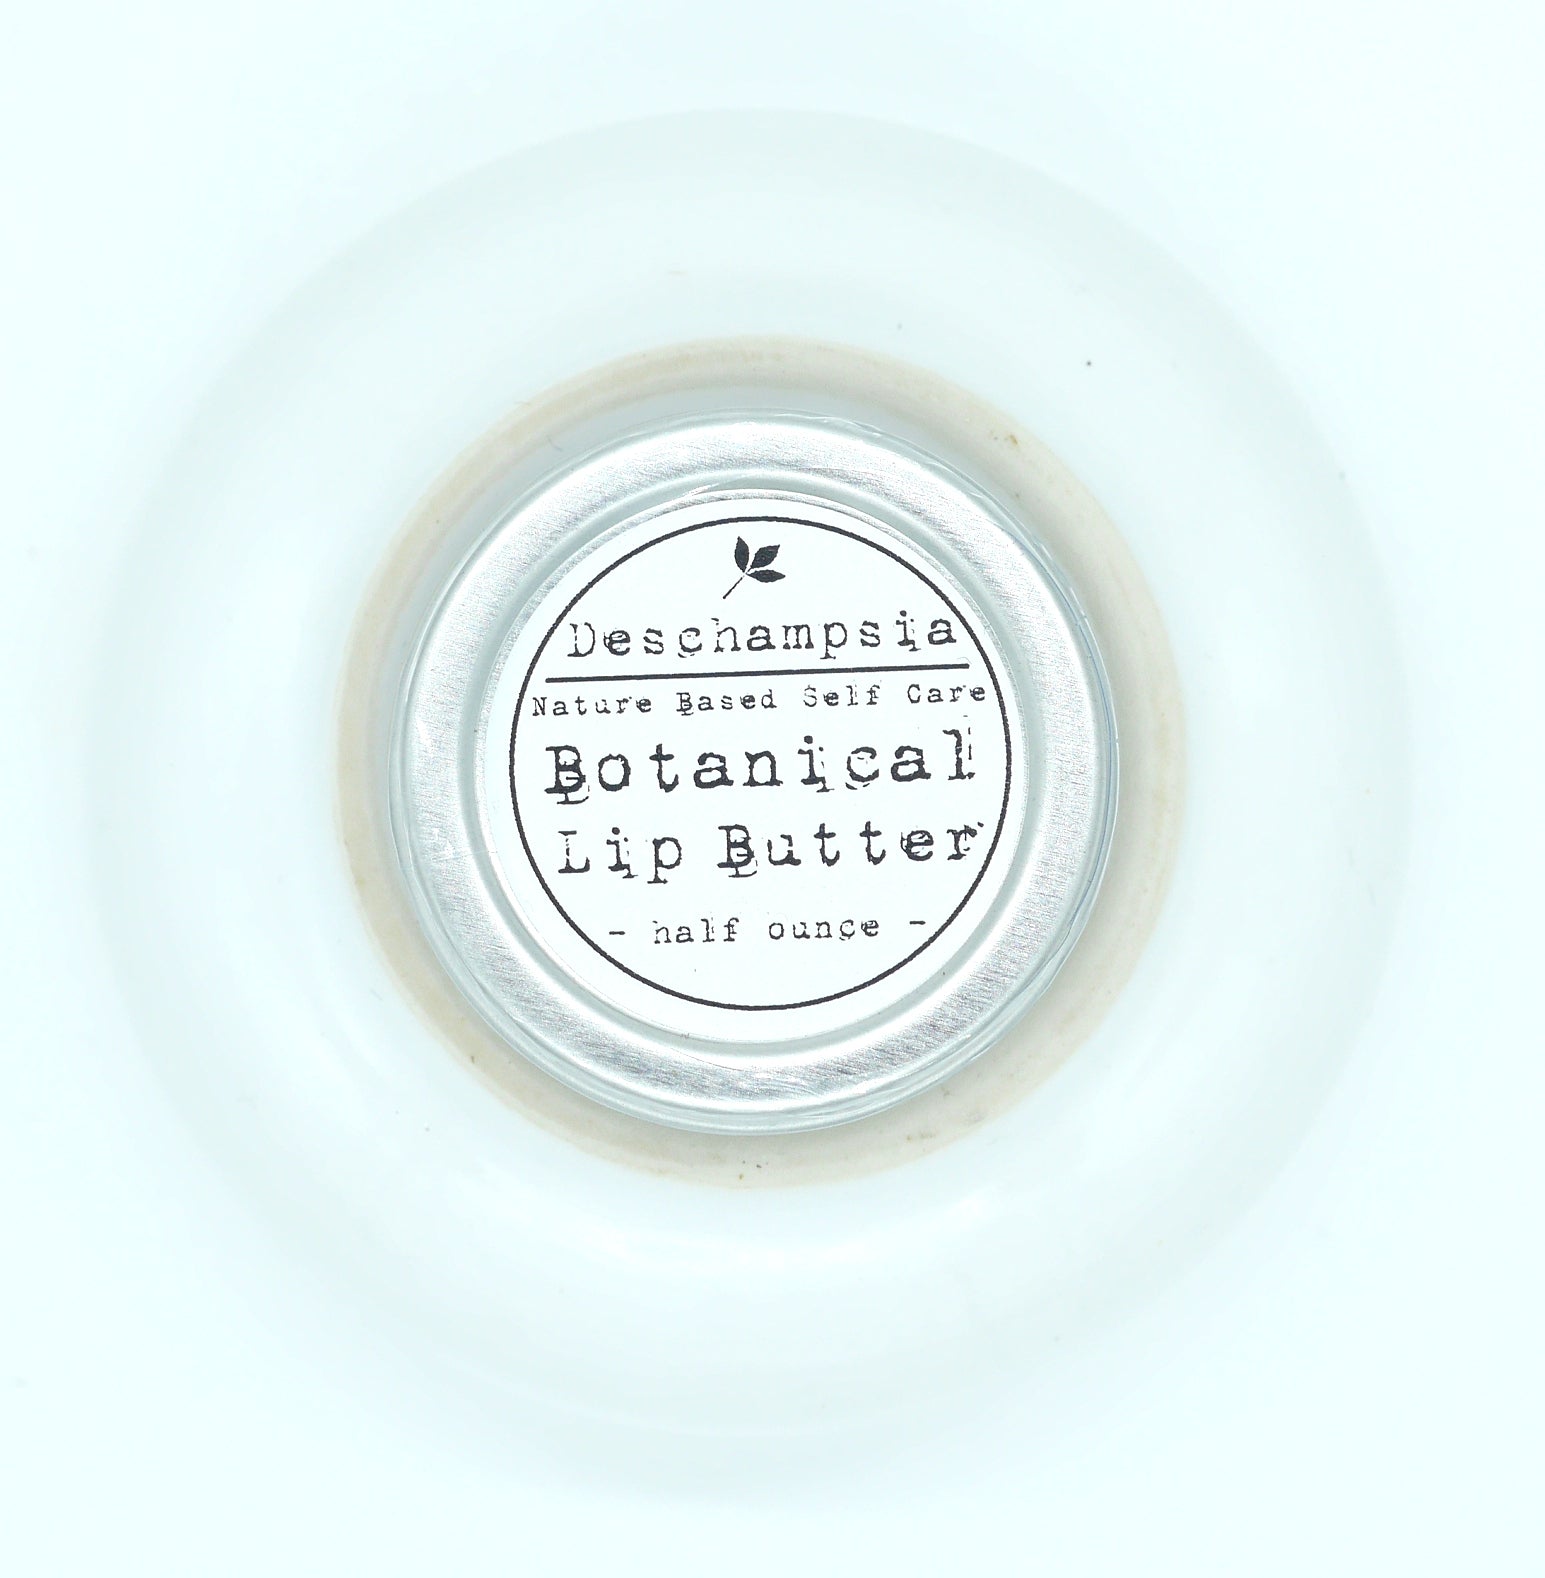 Botanical Lip Butter - Deschampsia - Nature Based Self Care